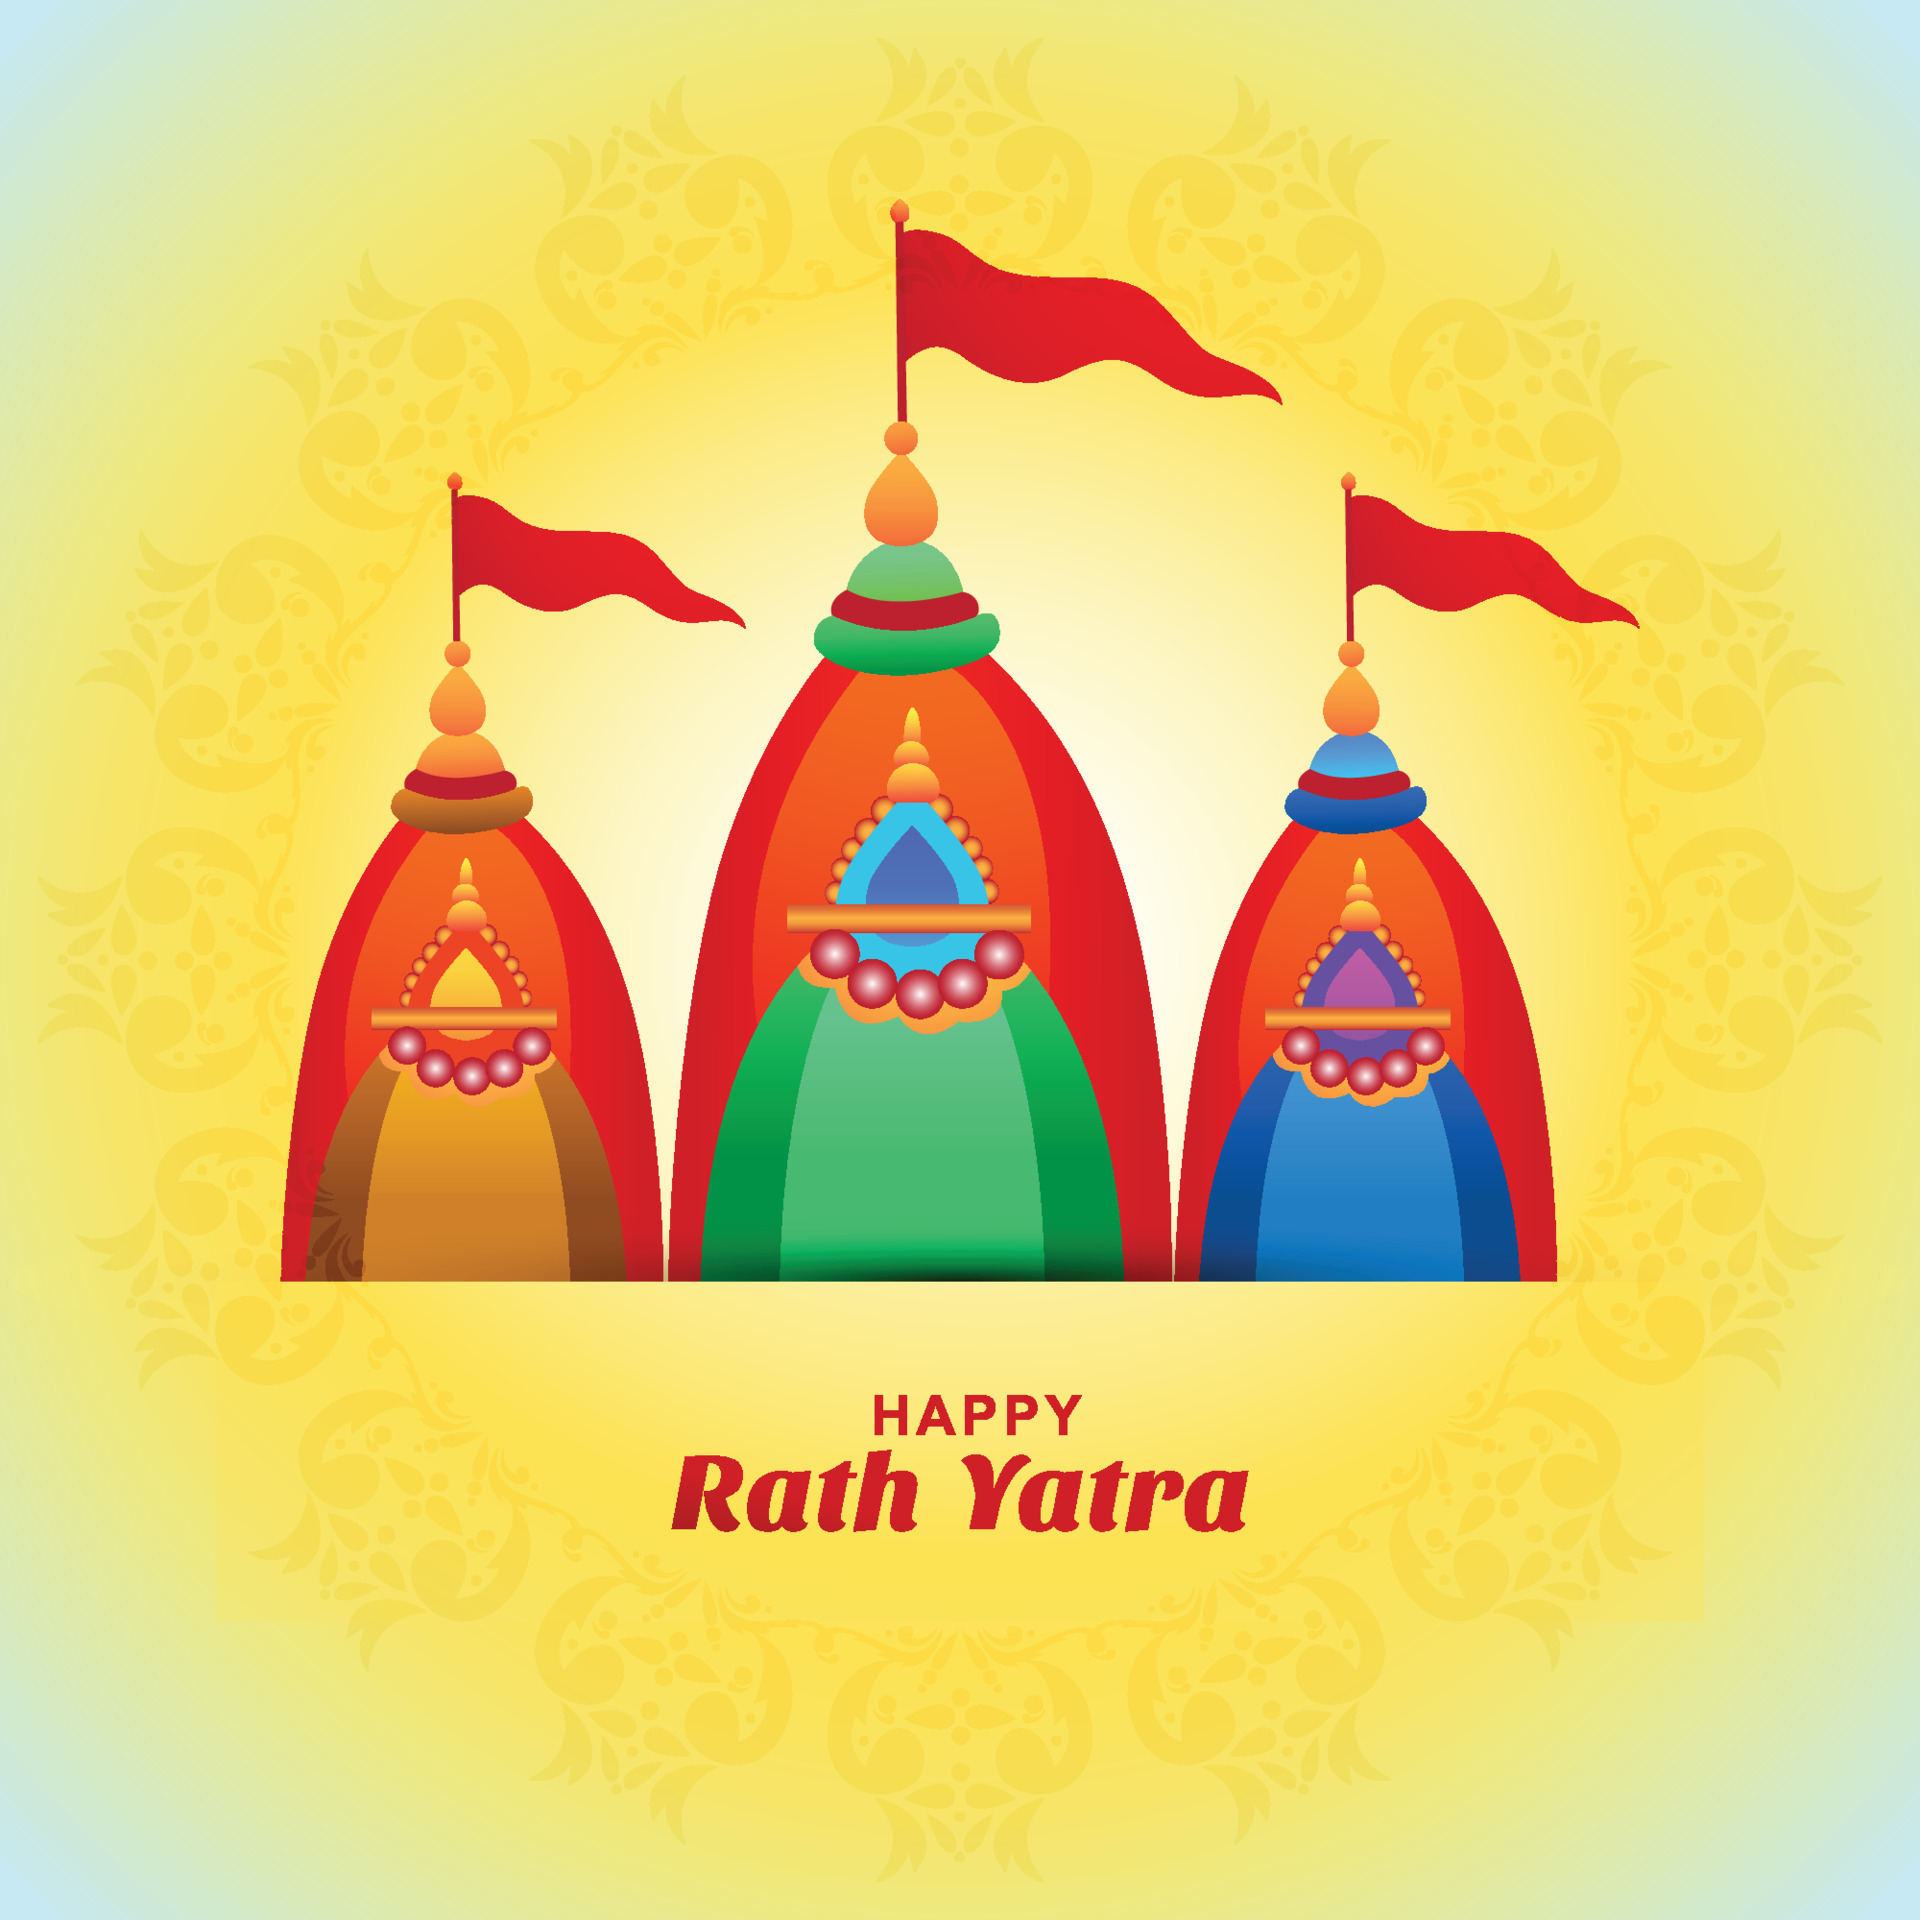 Lord jagannath annual rathayatra festival in odisha and gujarat holiday  background 8728838 Vector Art at Vecteezy